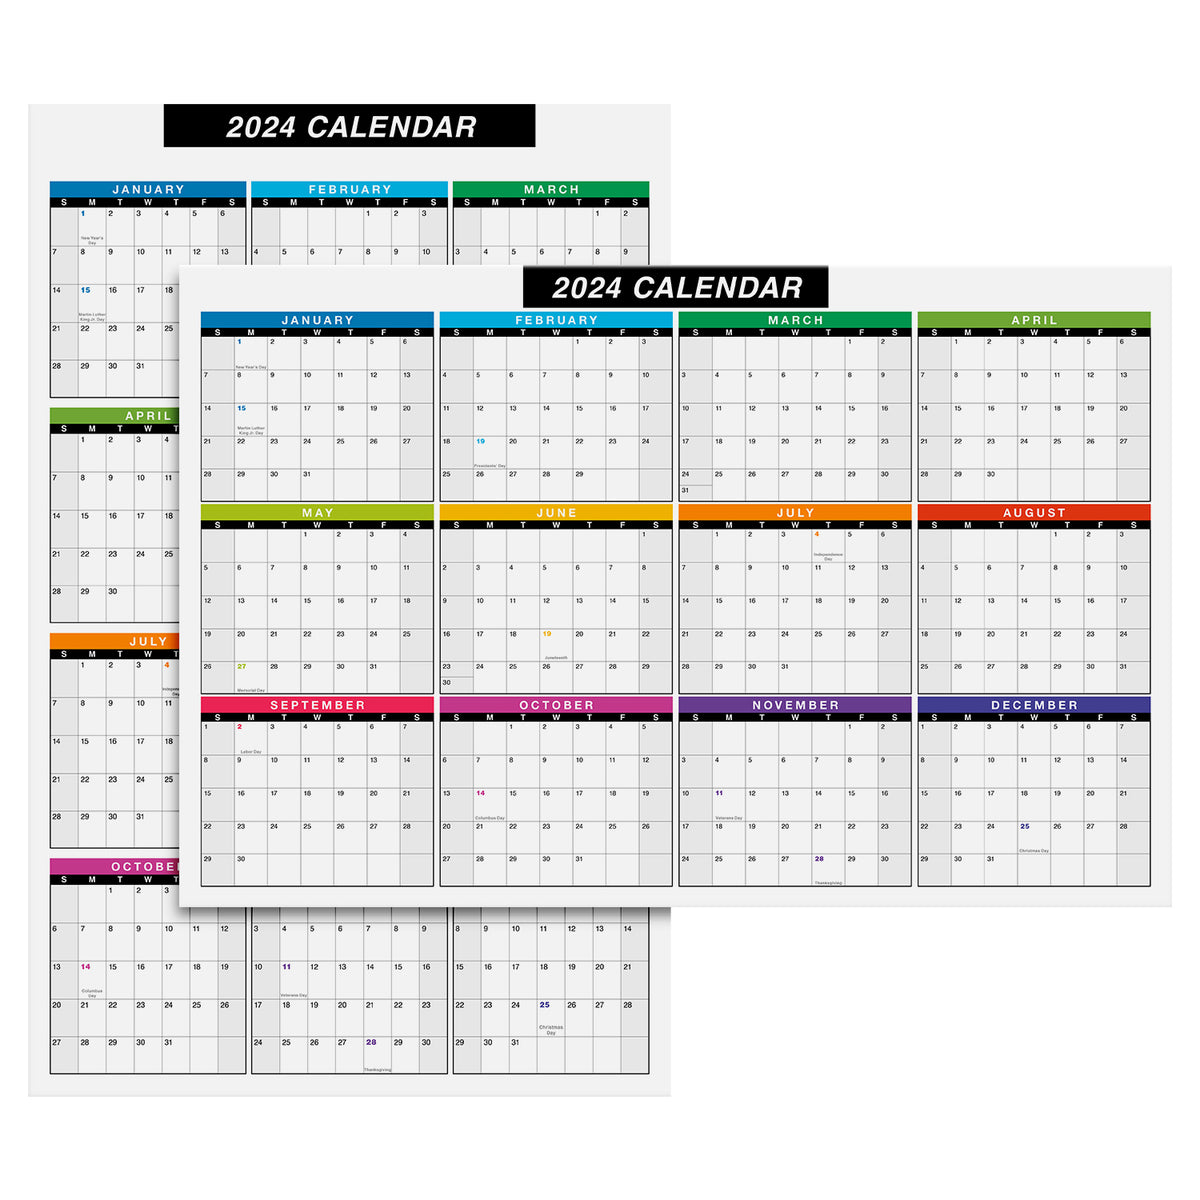 2024 Full Desk Calendar - 11 x 17” Large Size